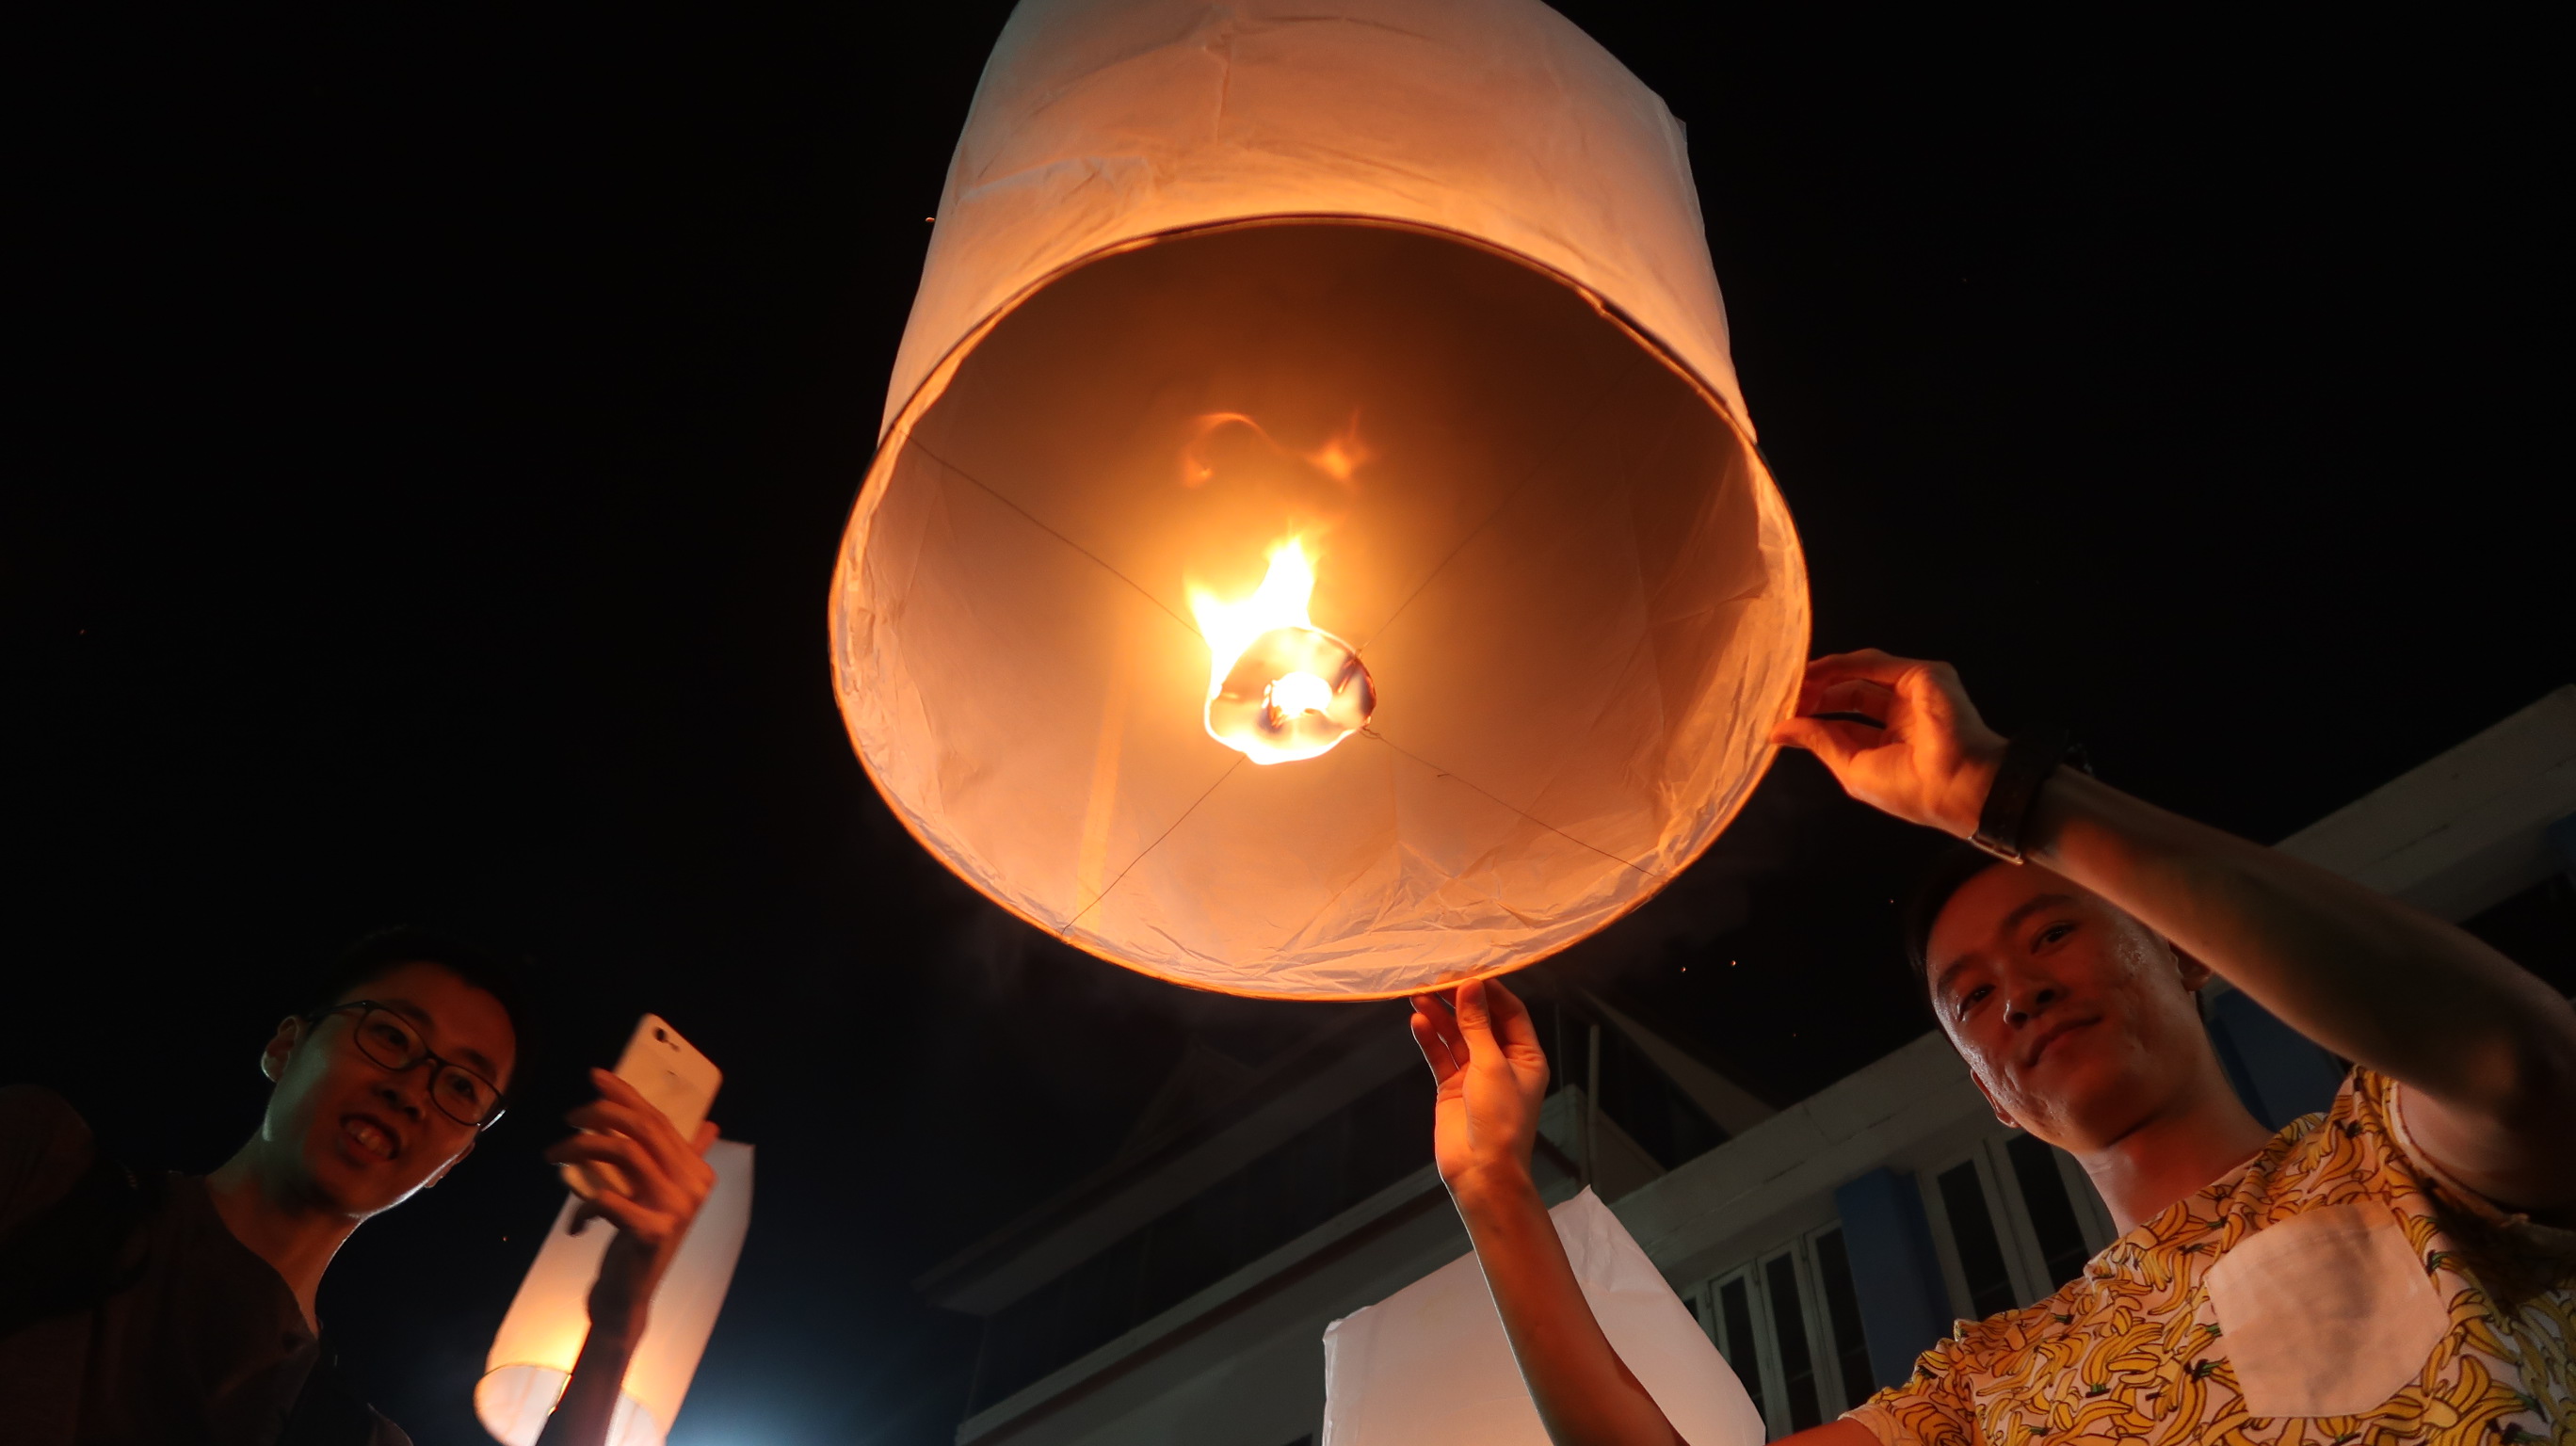 Yee Peng Lantern Festival in Chiang Mai